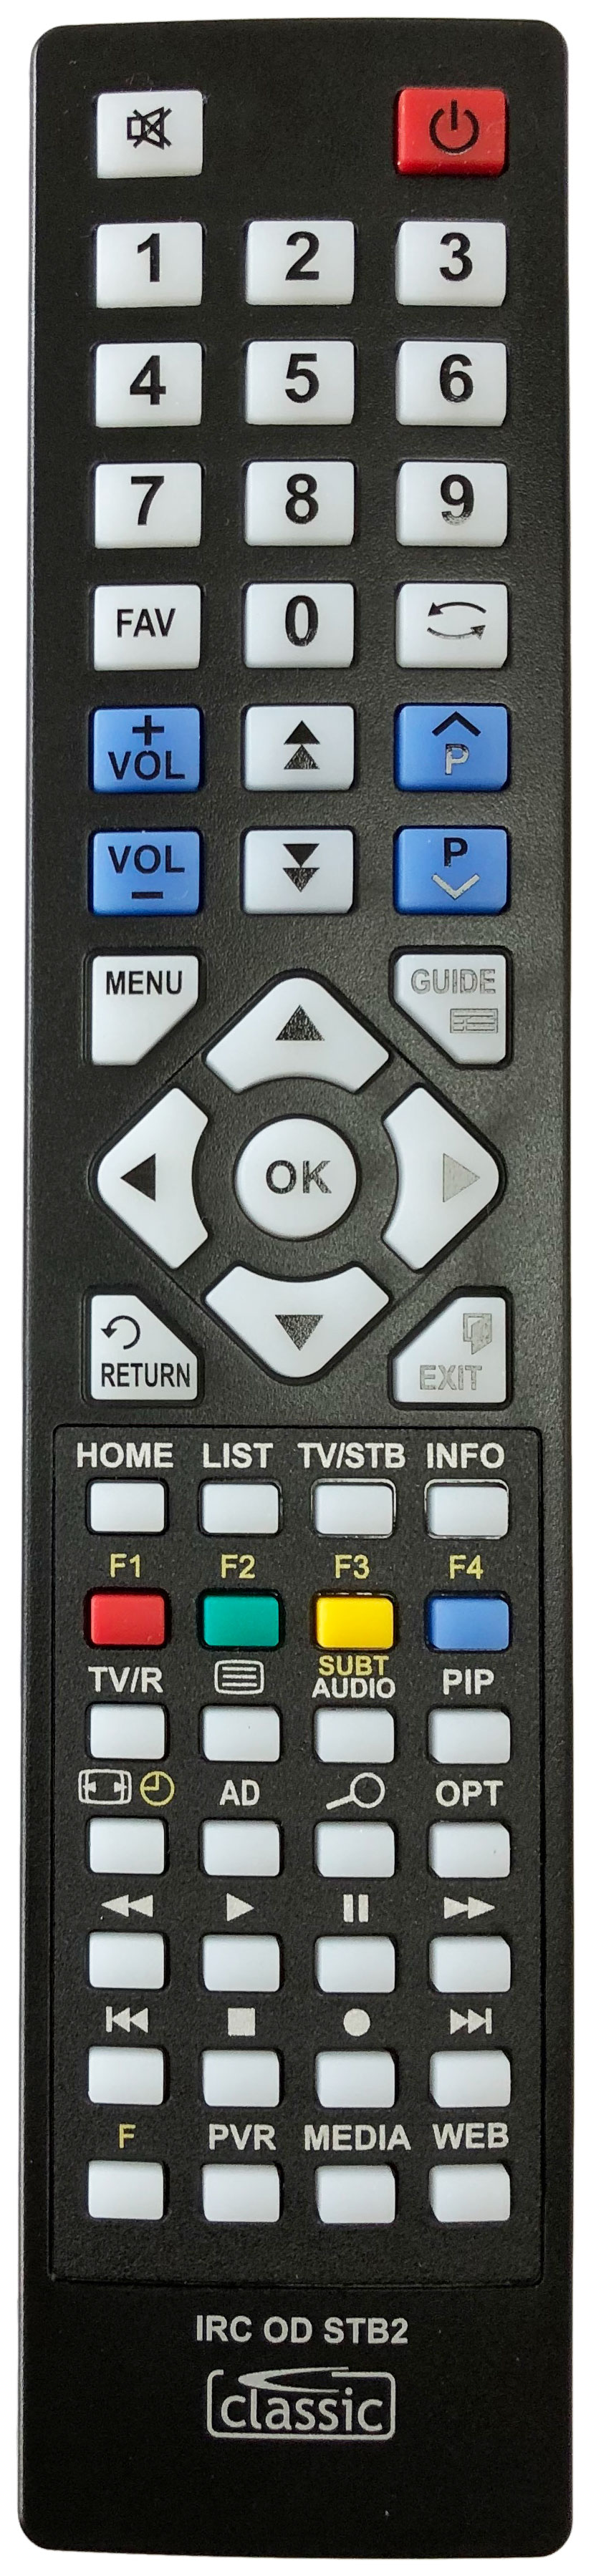 AKURA AMTDT3509-320 Remote Control